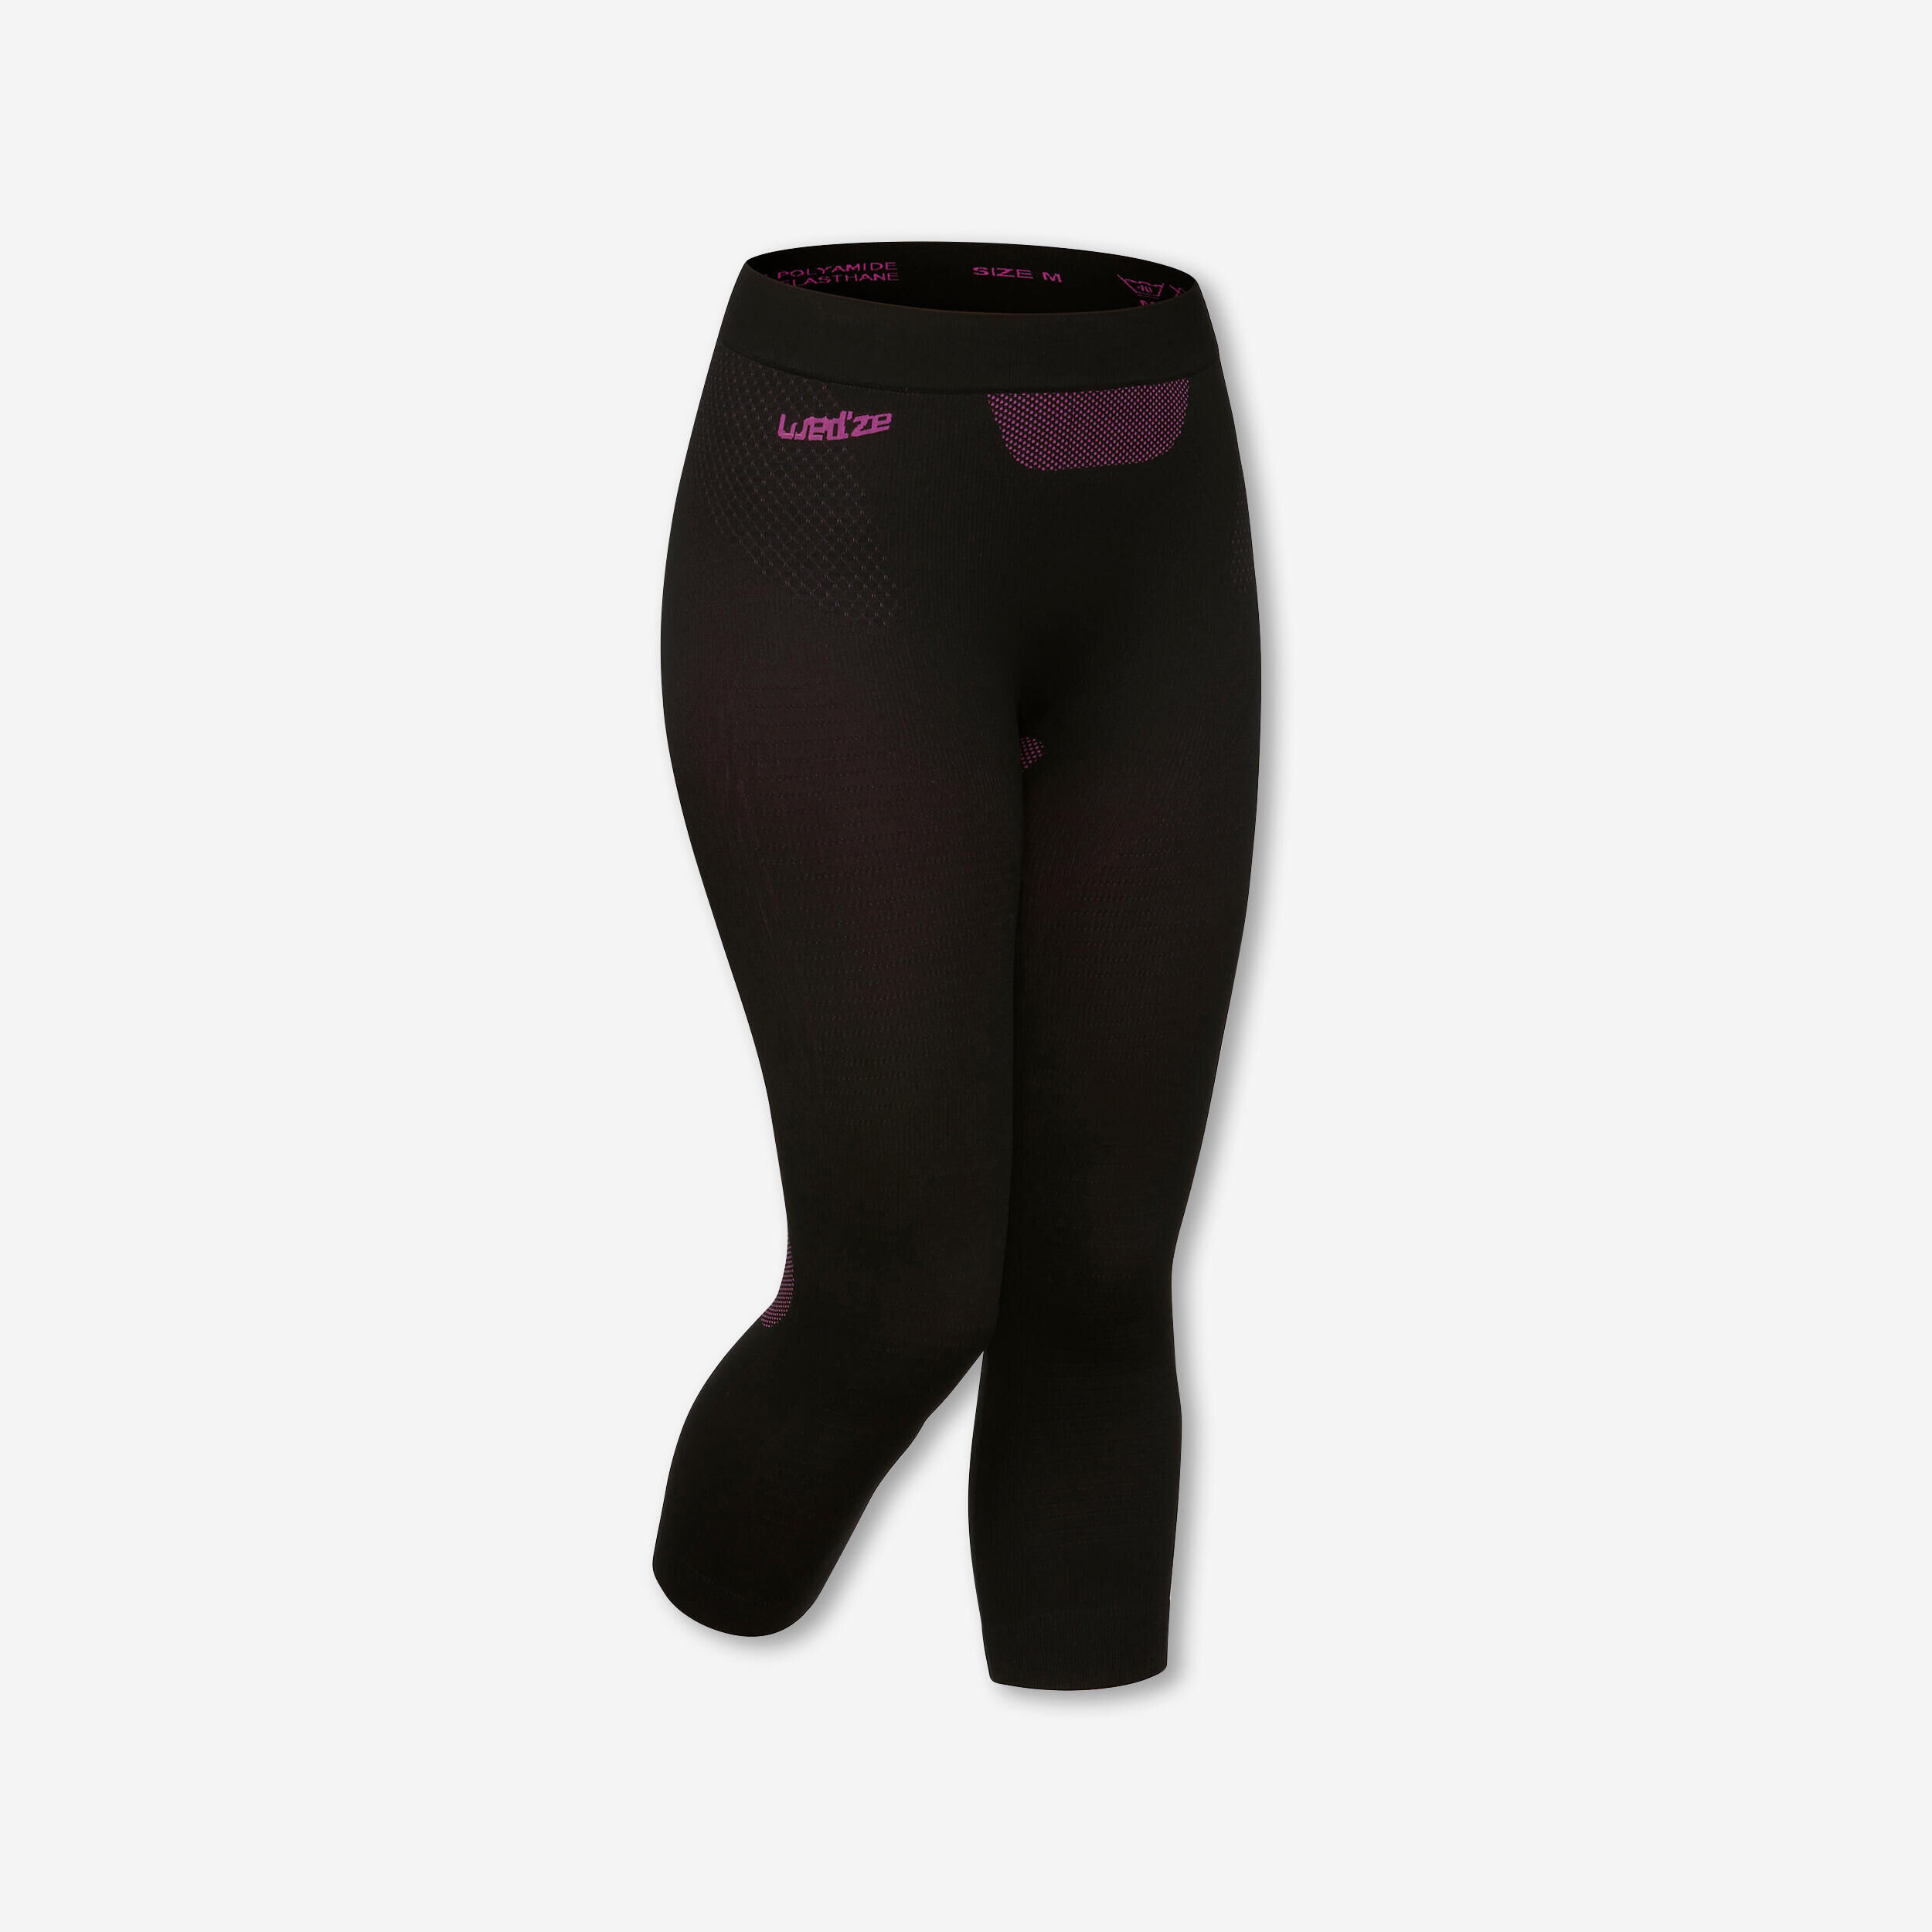 WEDZE Women’s Seamless Ski Base Layer Bottom - BL 580 I-Soft - Black/Purple